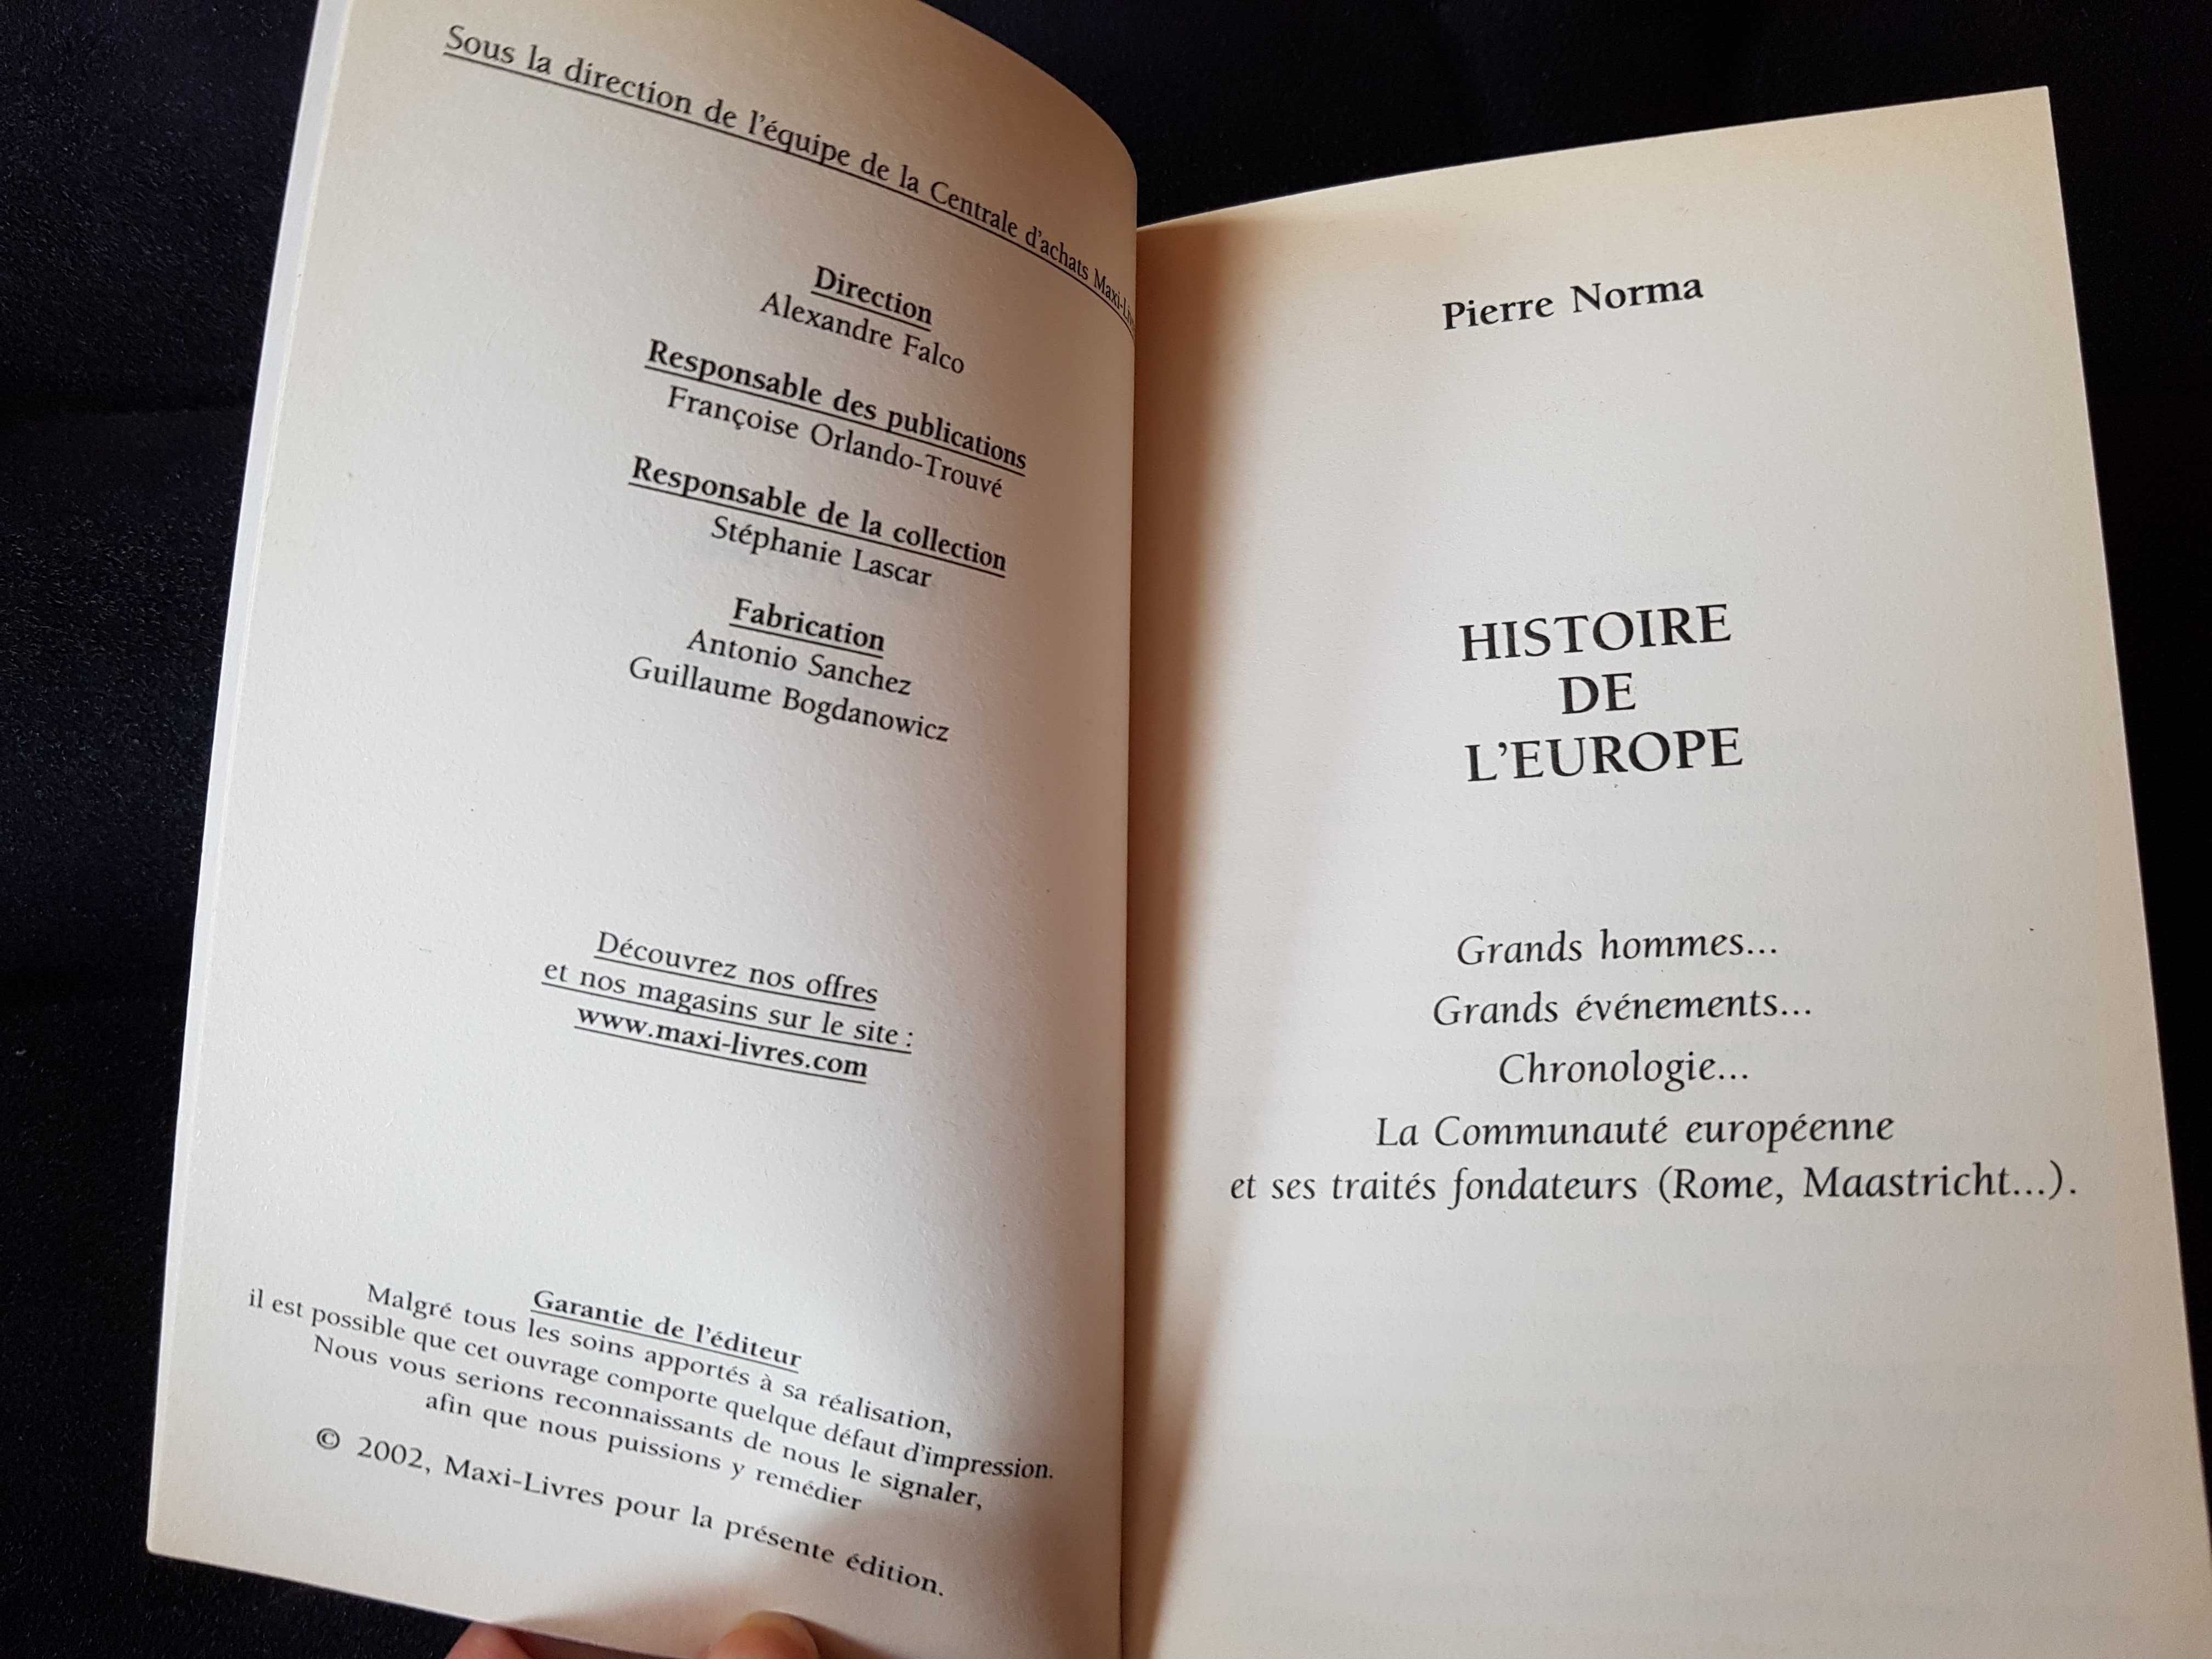 книги французский язык Histoire de l"Europe и Eugenie Grandet Бальзак